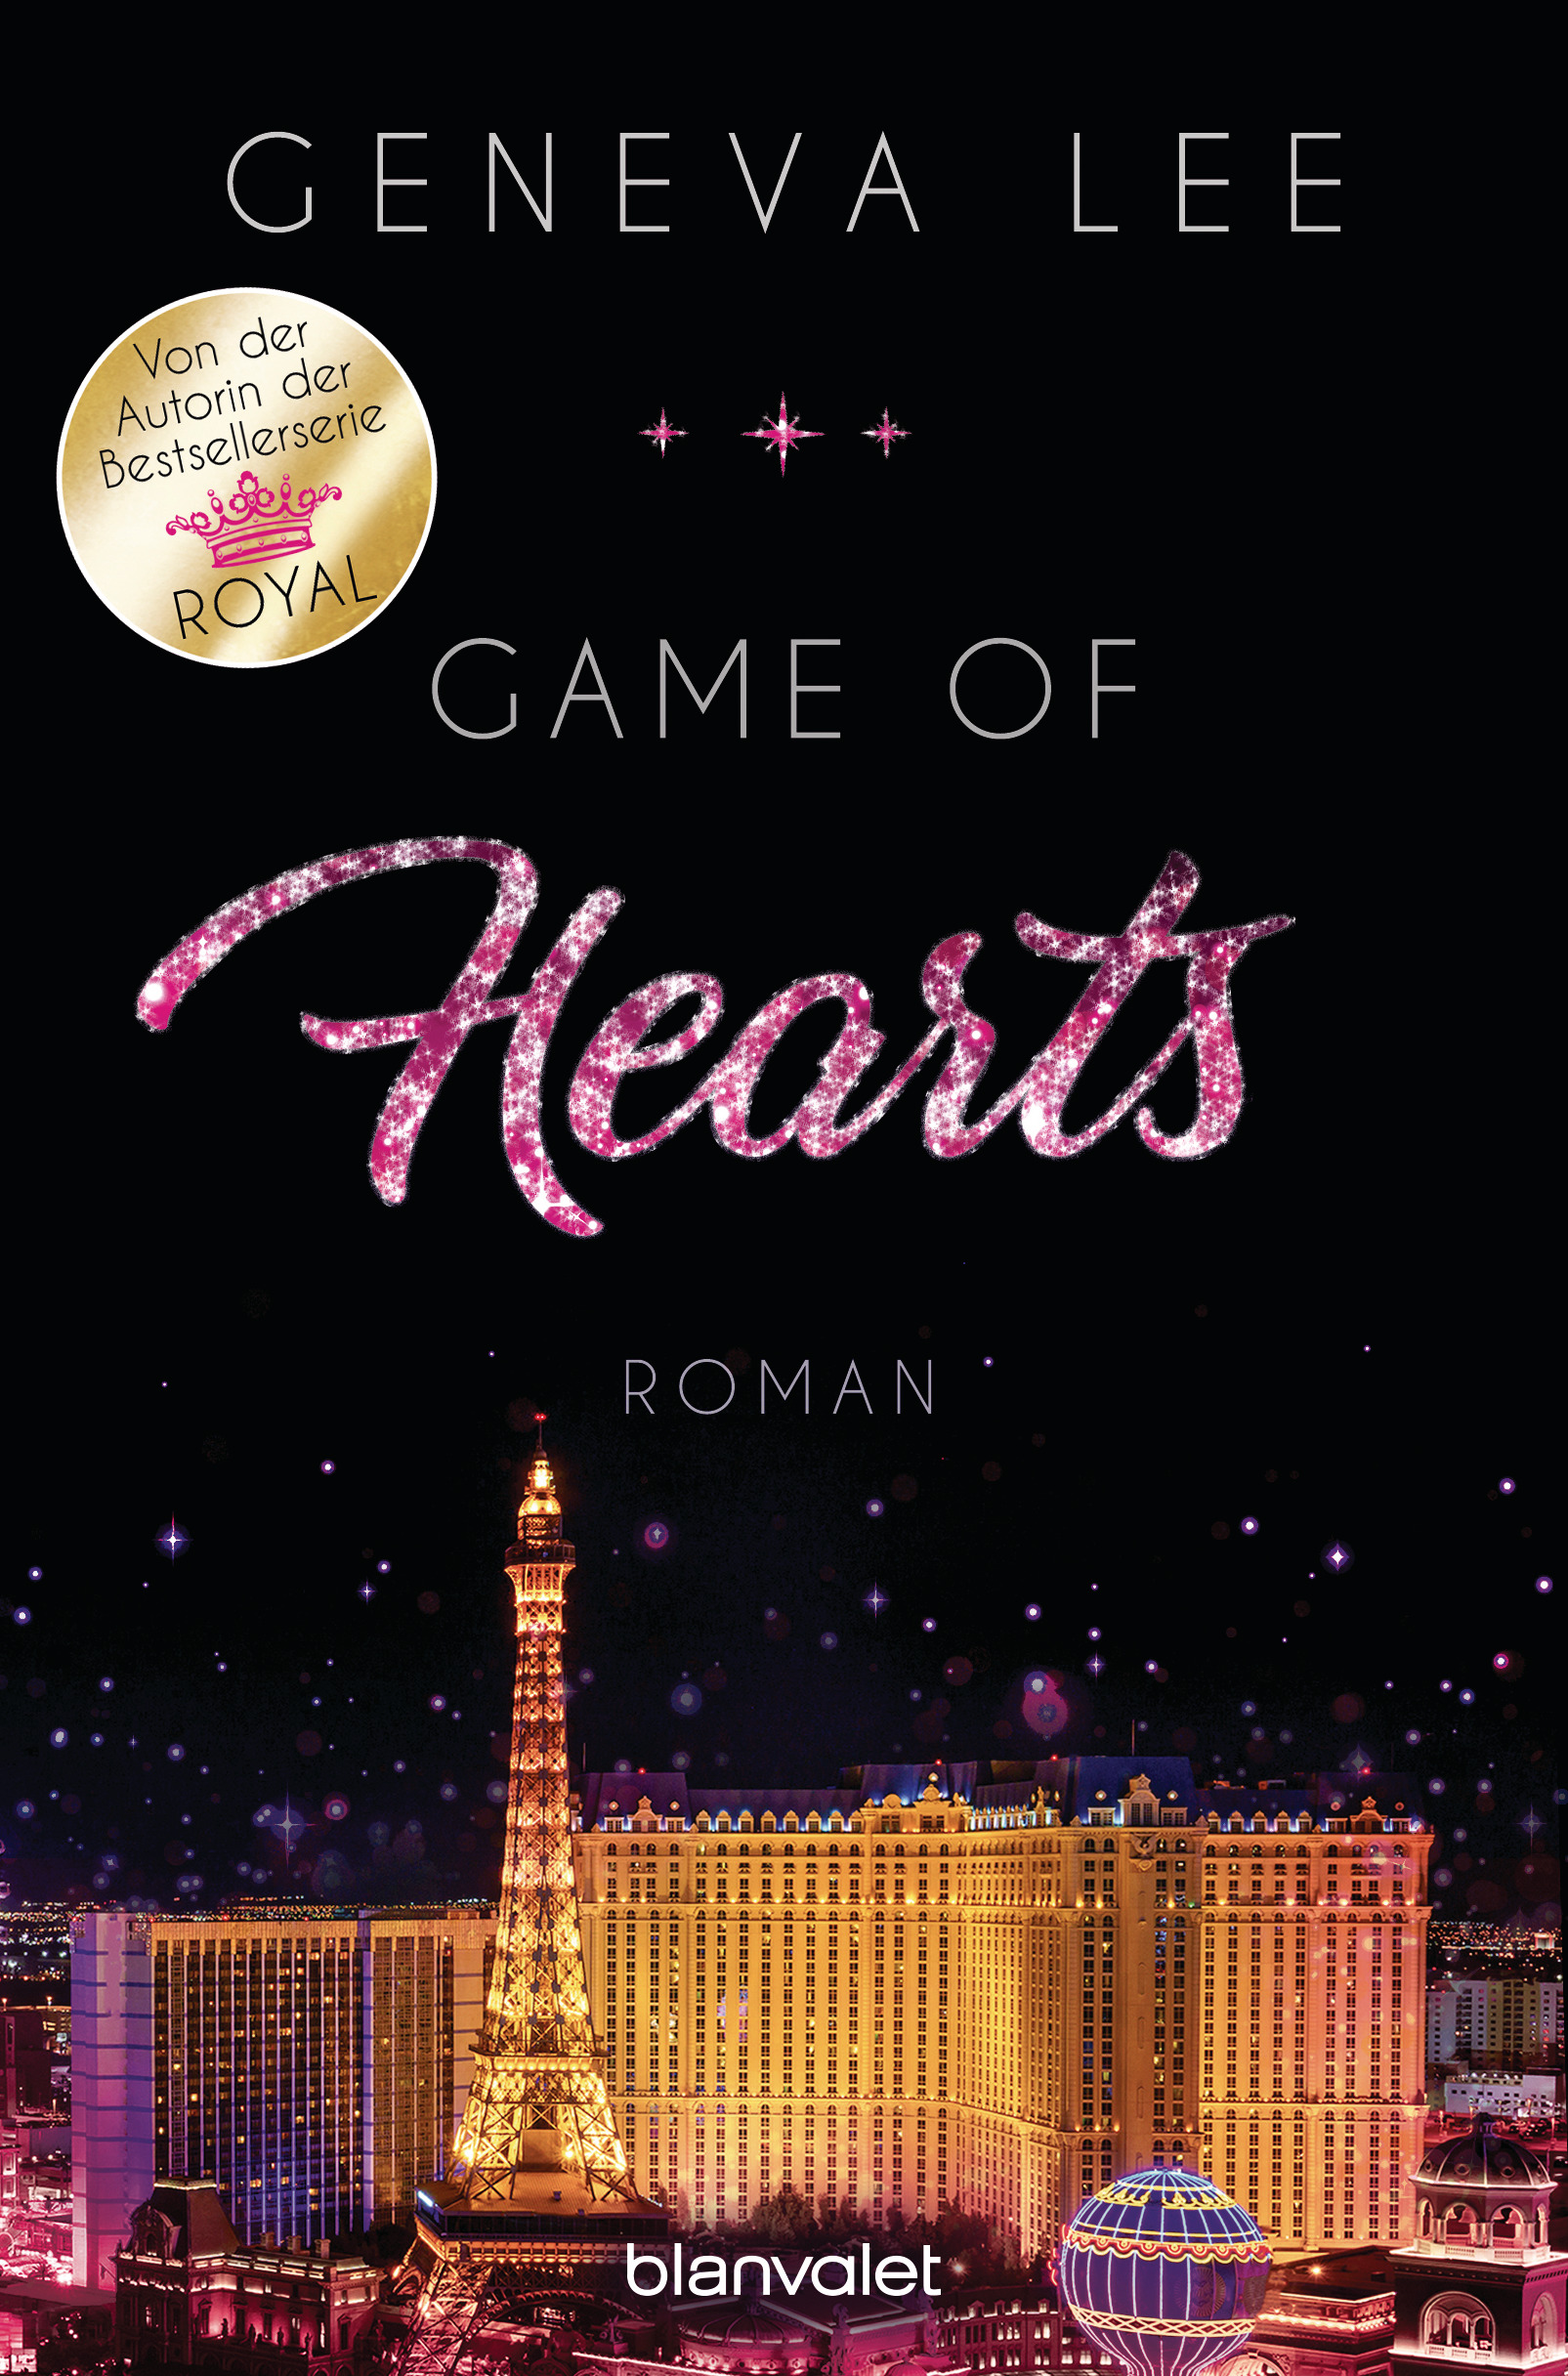 https://www.randomhouse.de/Paperback/Game-of-Hearts/Geneva-Lee/Blanvalet-Taschenbuch/e517489.rhd